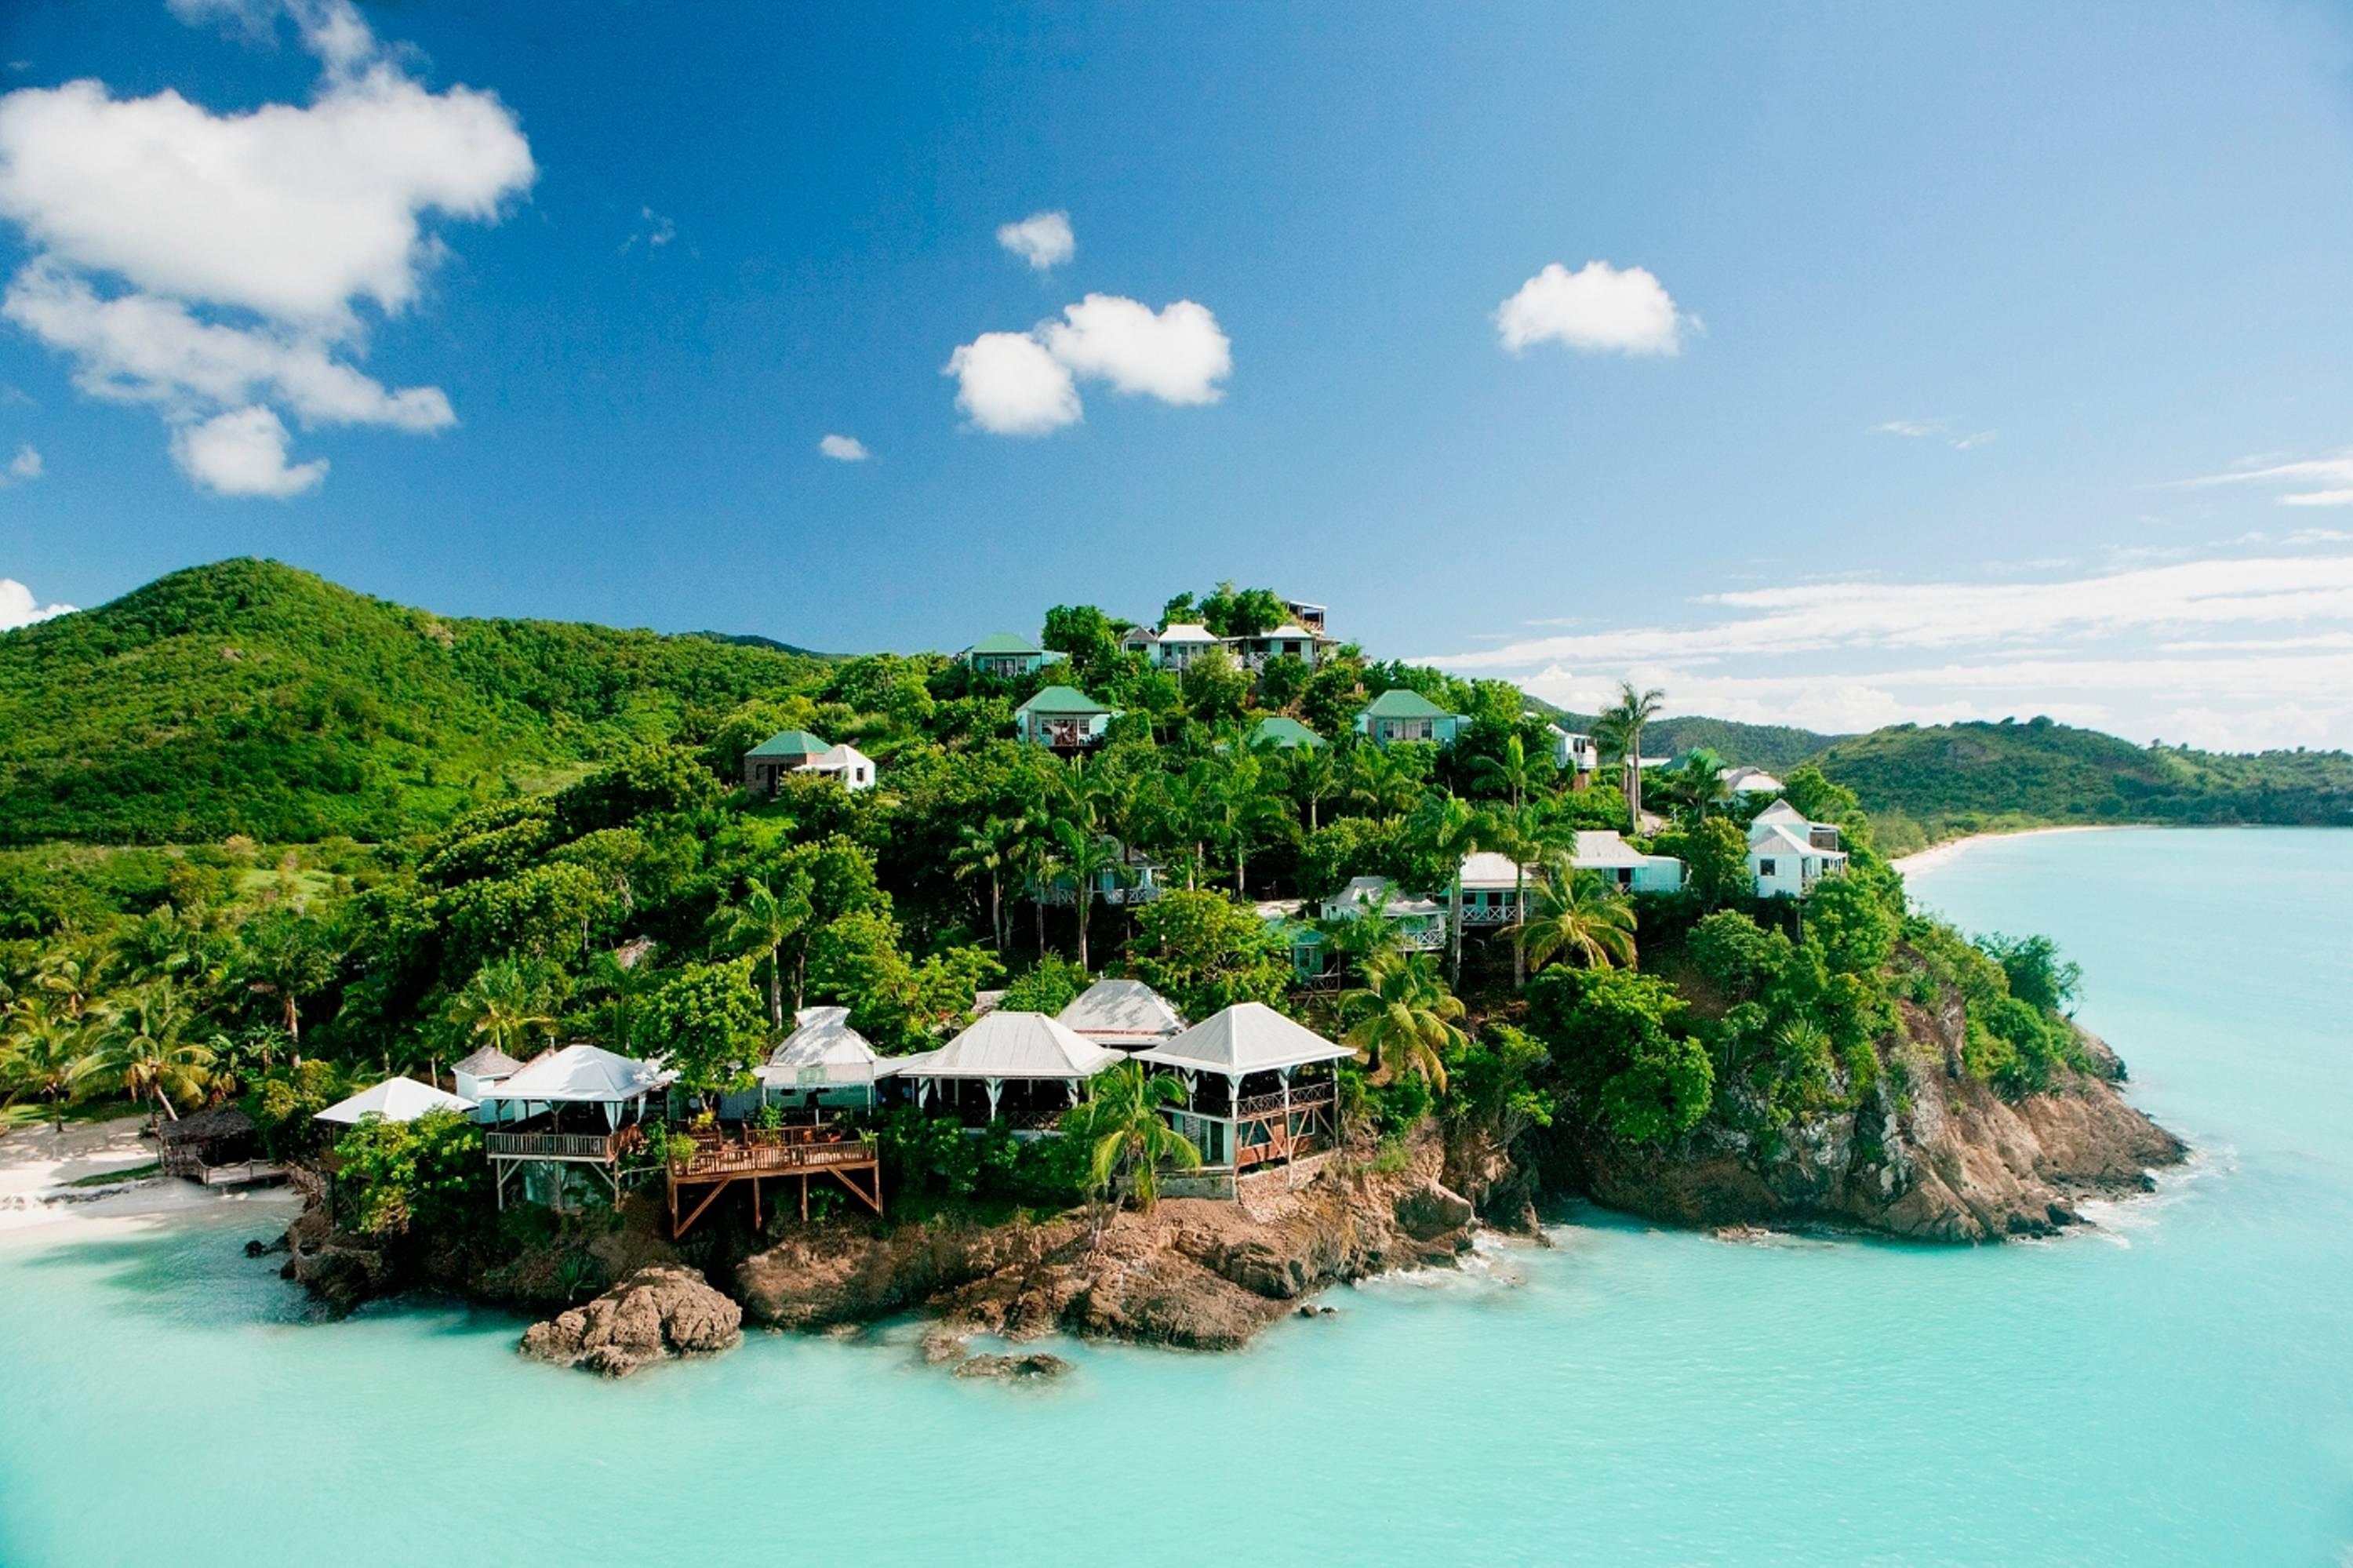 Dream resort tropical island - (#108584) - High Quality and ...